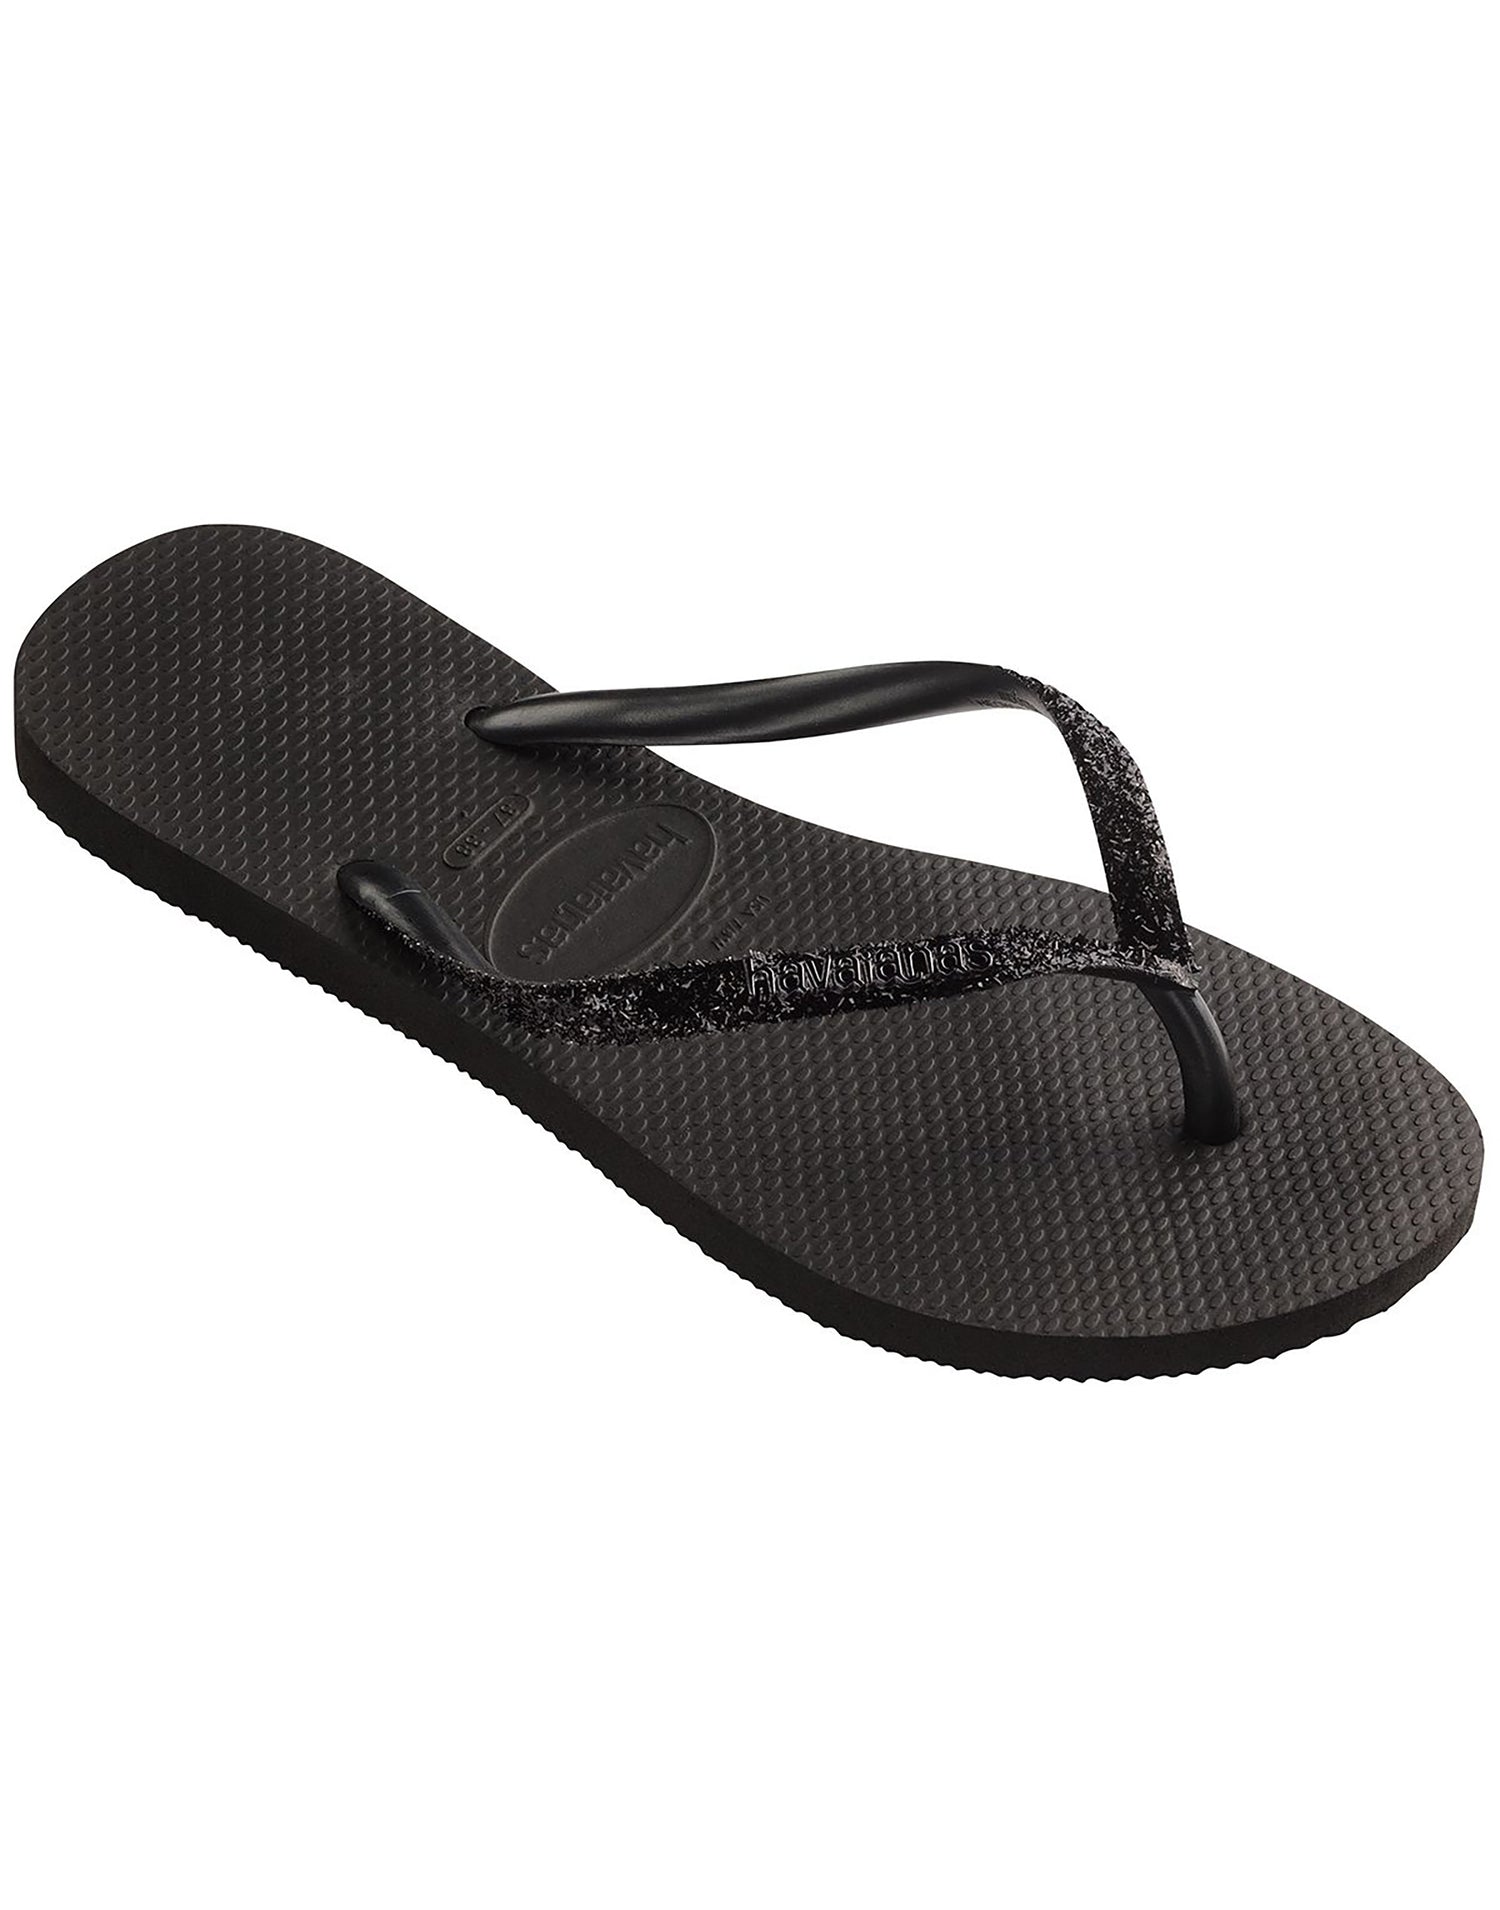 Slim Glitter II Sandal by Havaianas in Black - Angled View